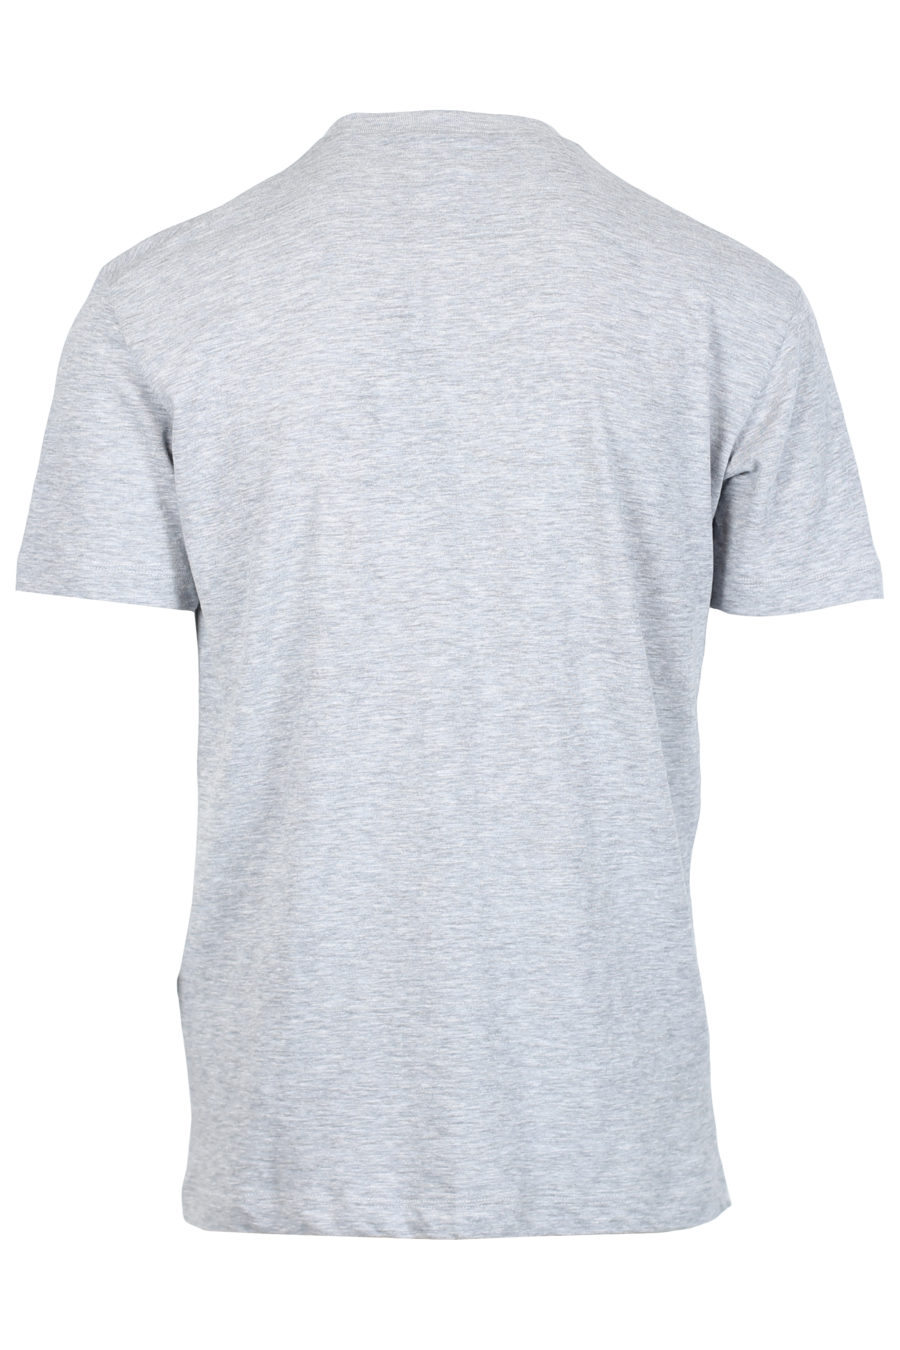 Grey T-shirt with spray logo - IMG 2374